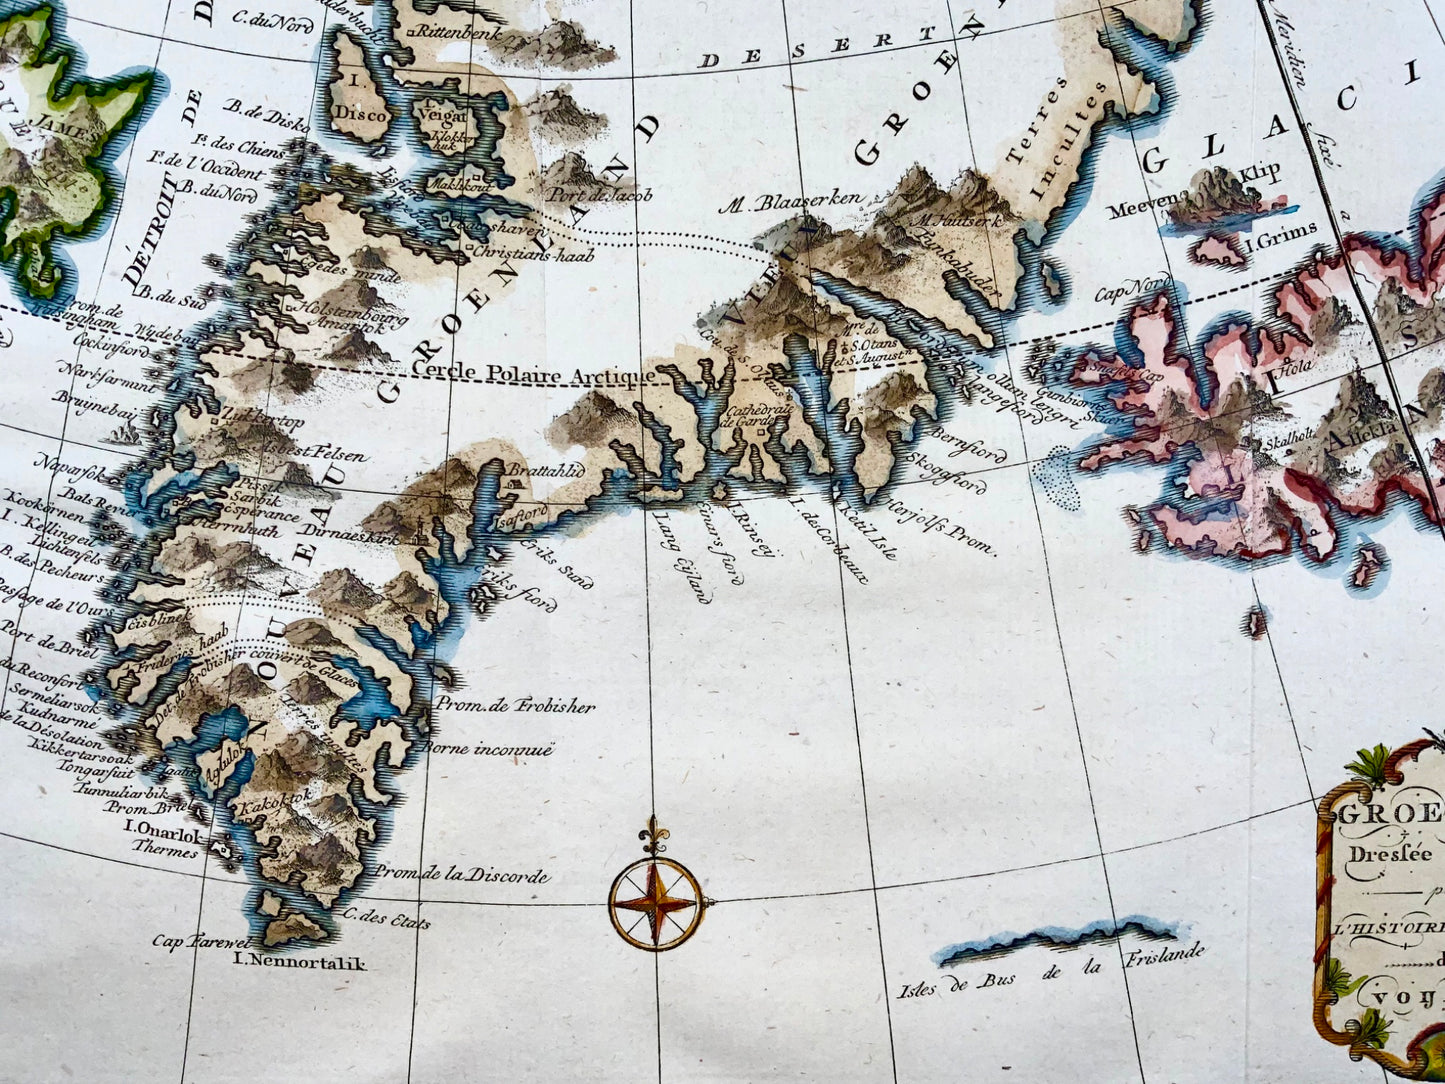 1779 H. Klockhoff, Greenland, Groenland, Iceland, Arctic, hand coloured map, travel